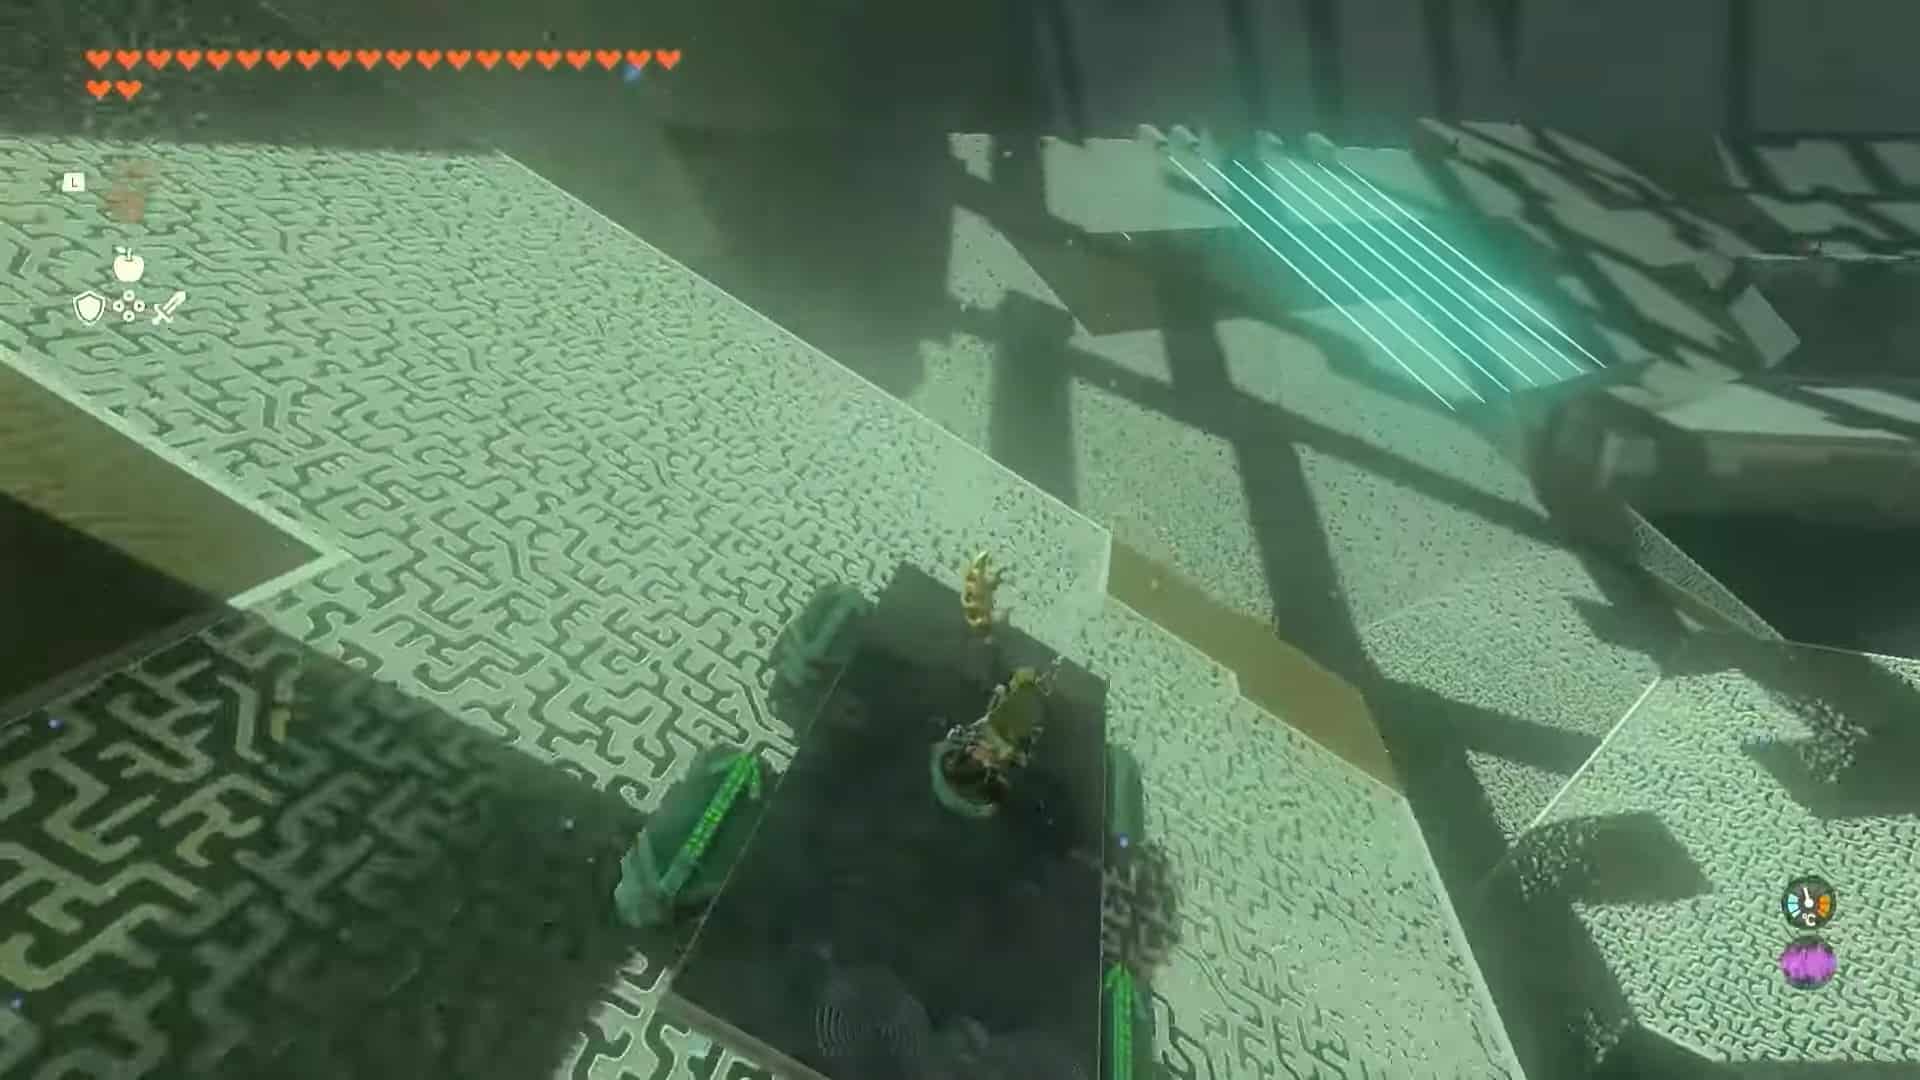 Mogisari Shrine go through lasers